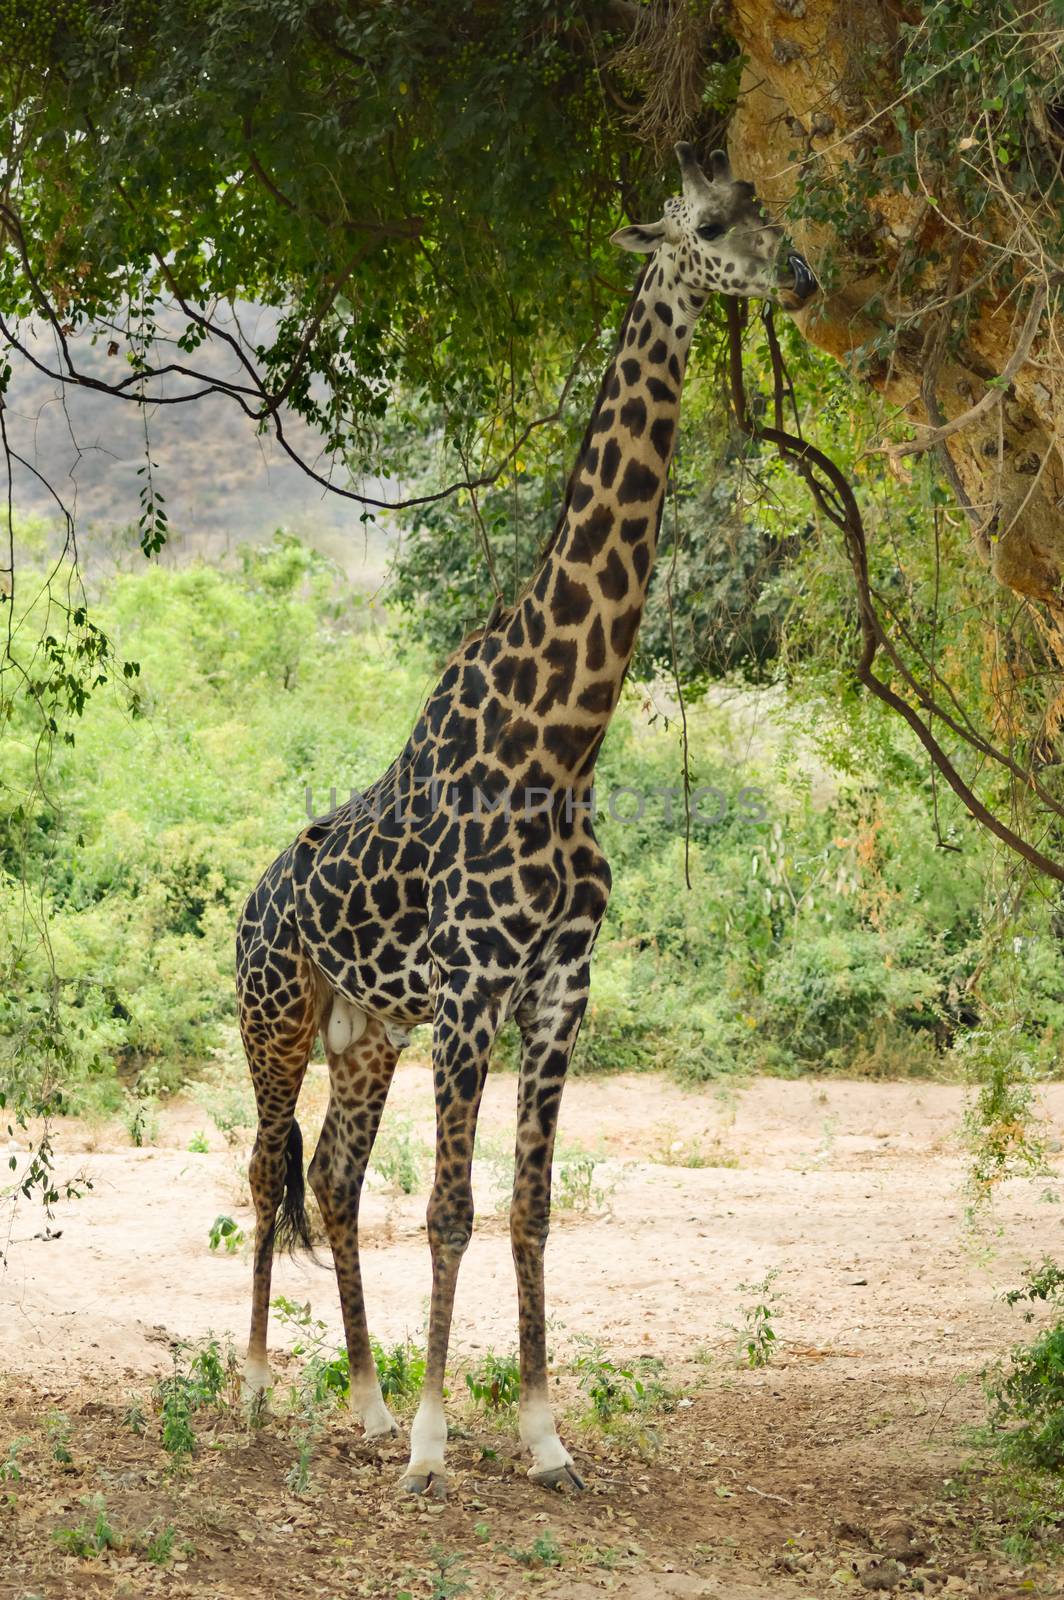 Giraffe eating leaves of a tree in Lake Manyara National Park in Tanzania